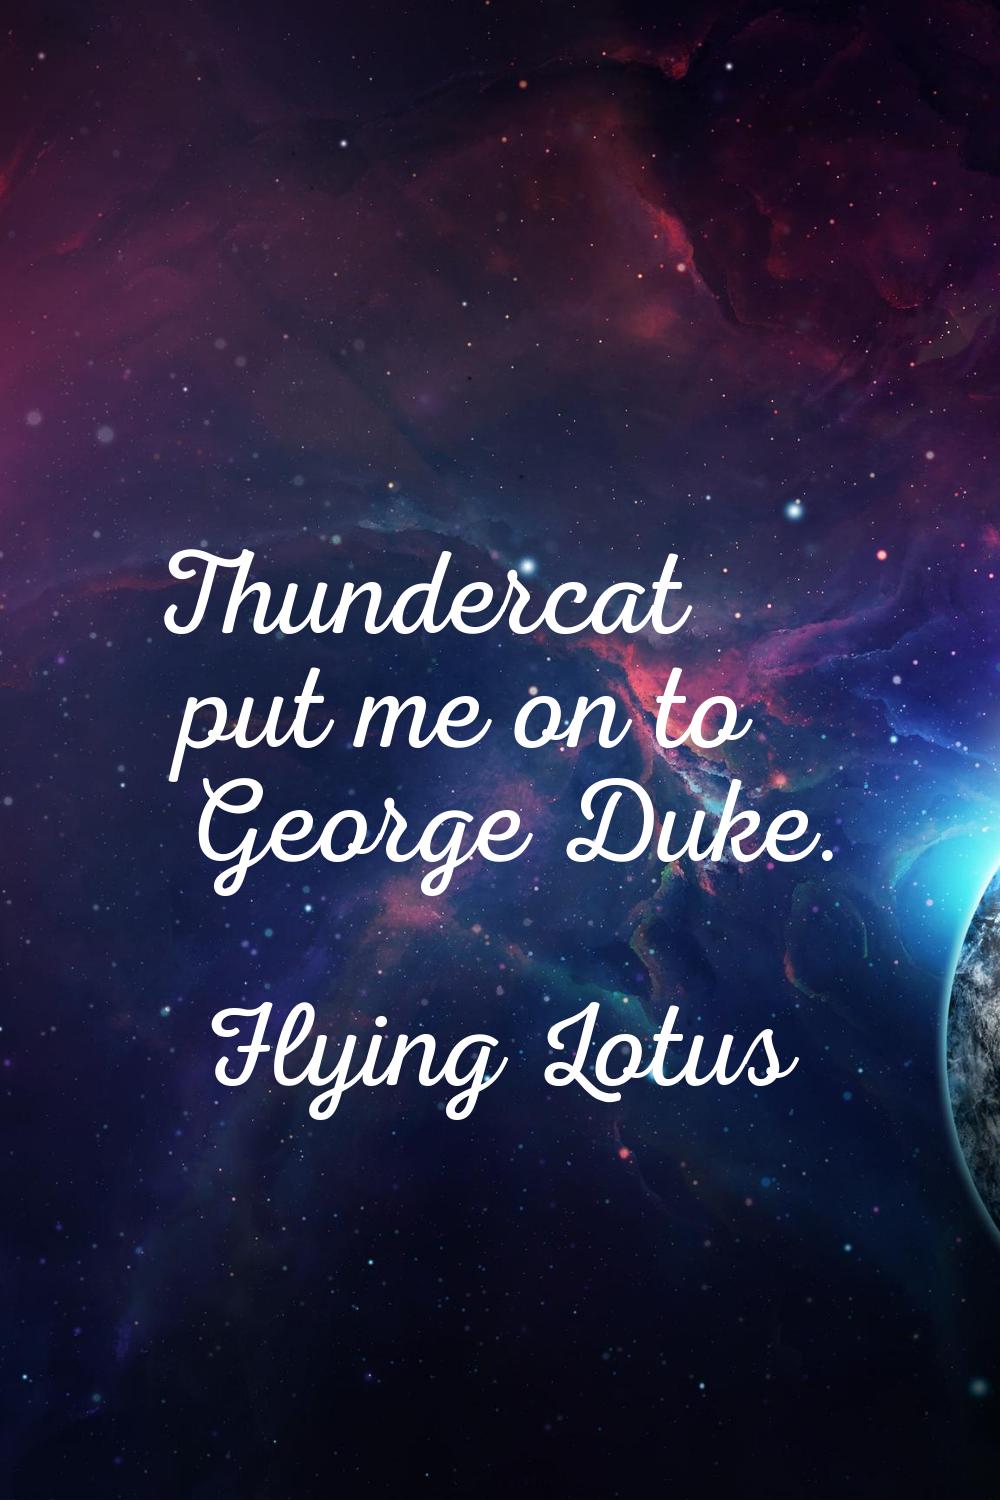 Thundercat put me on to George Duke.